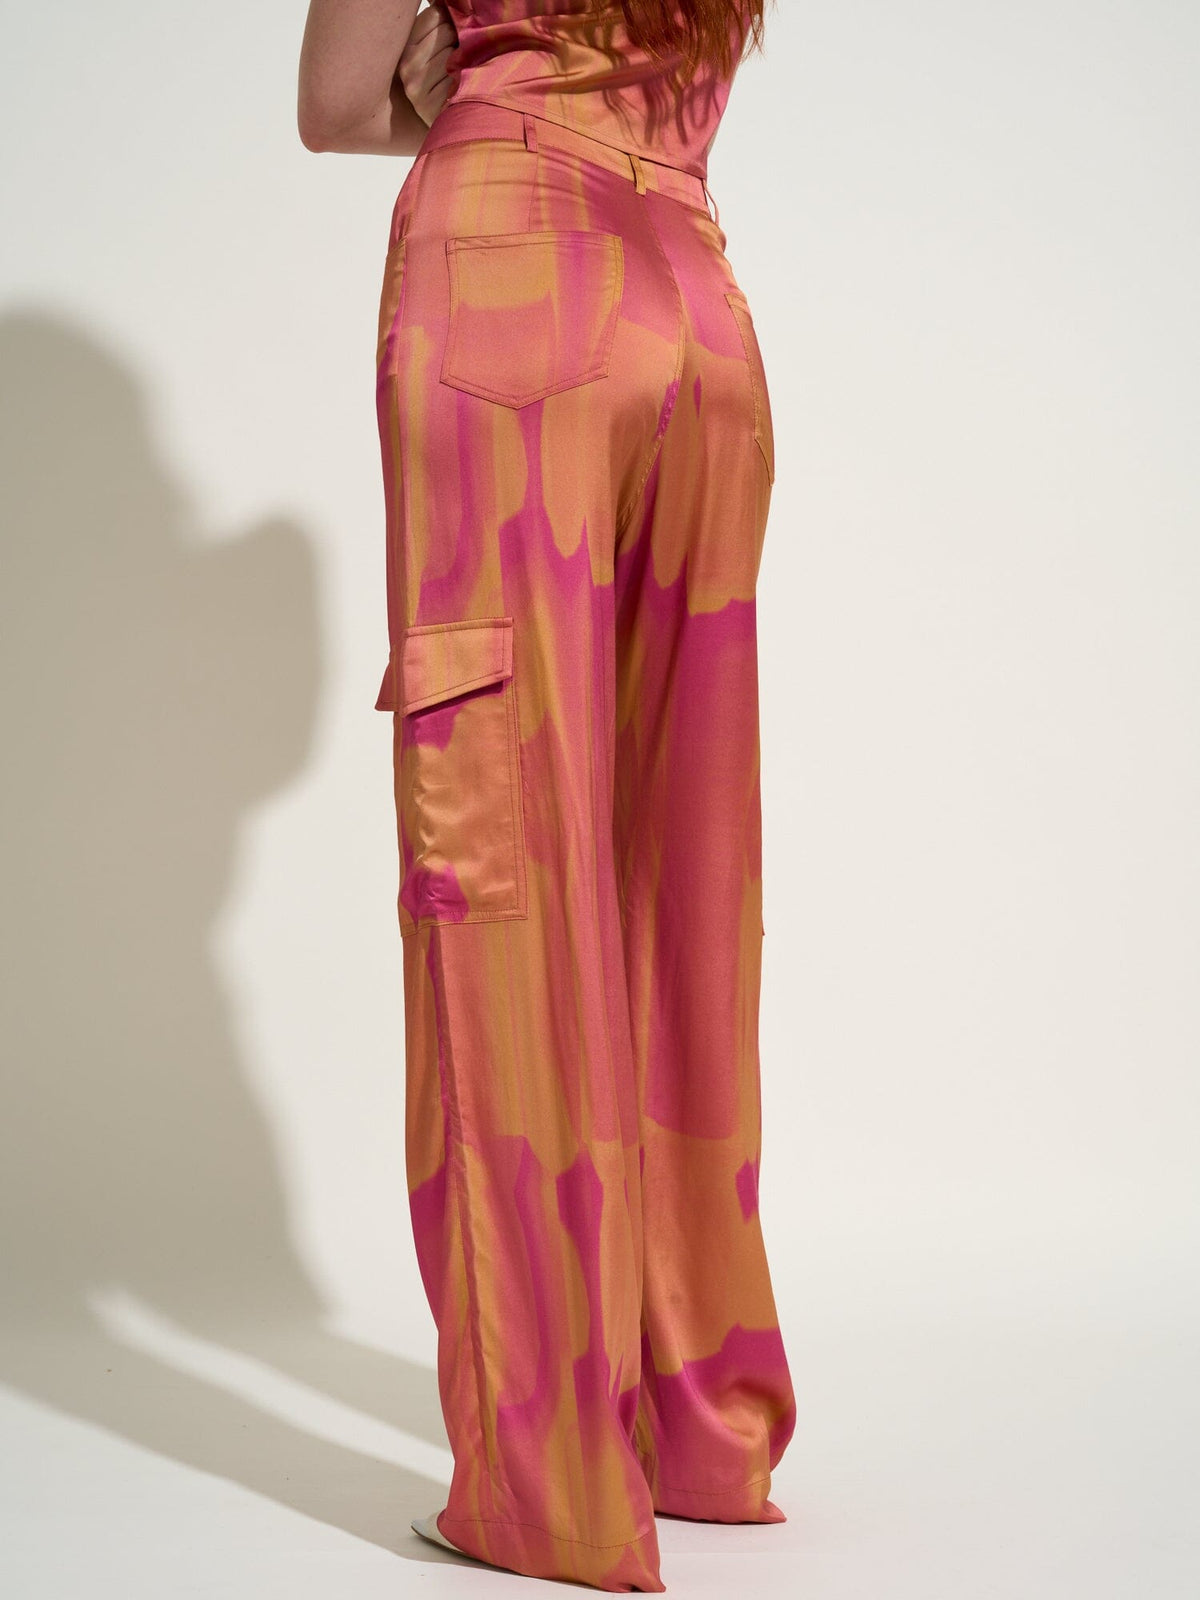 HEALY - Tie & Dye Fuchsia Printed Viscose Satin Cargo Pants Pants Fête Impériale